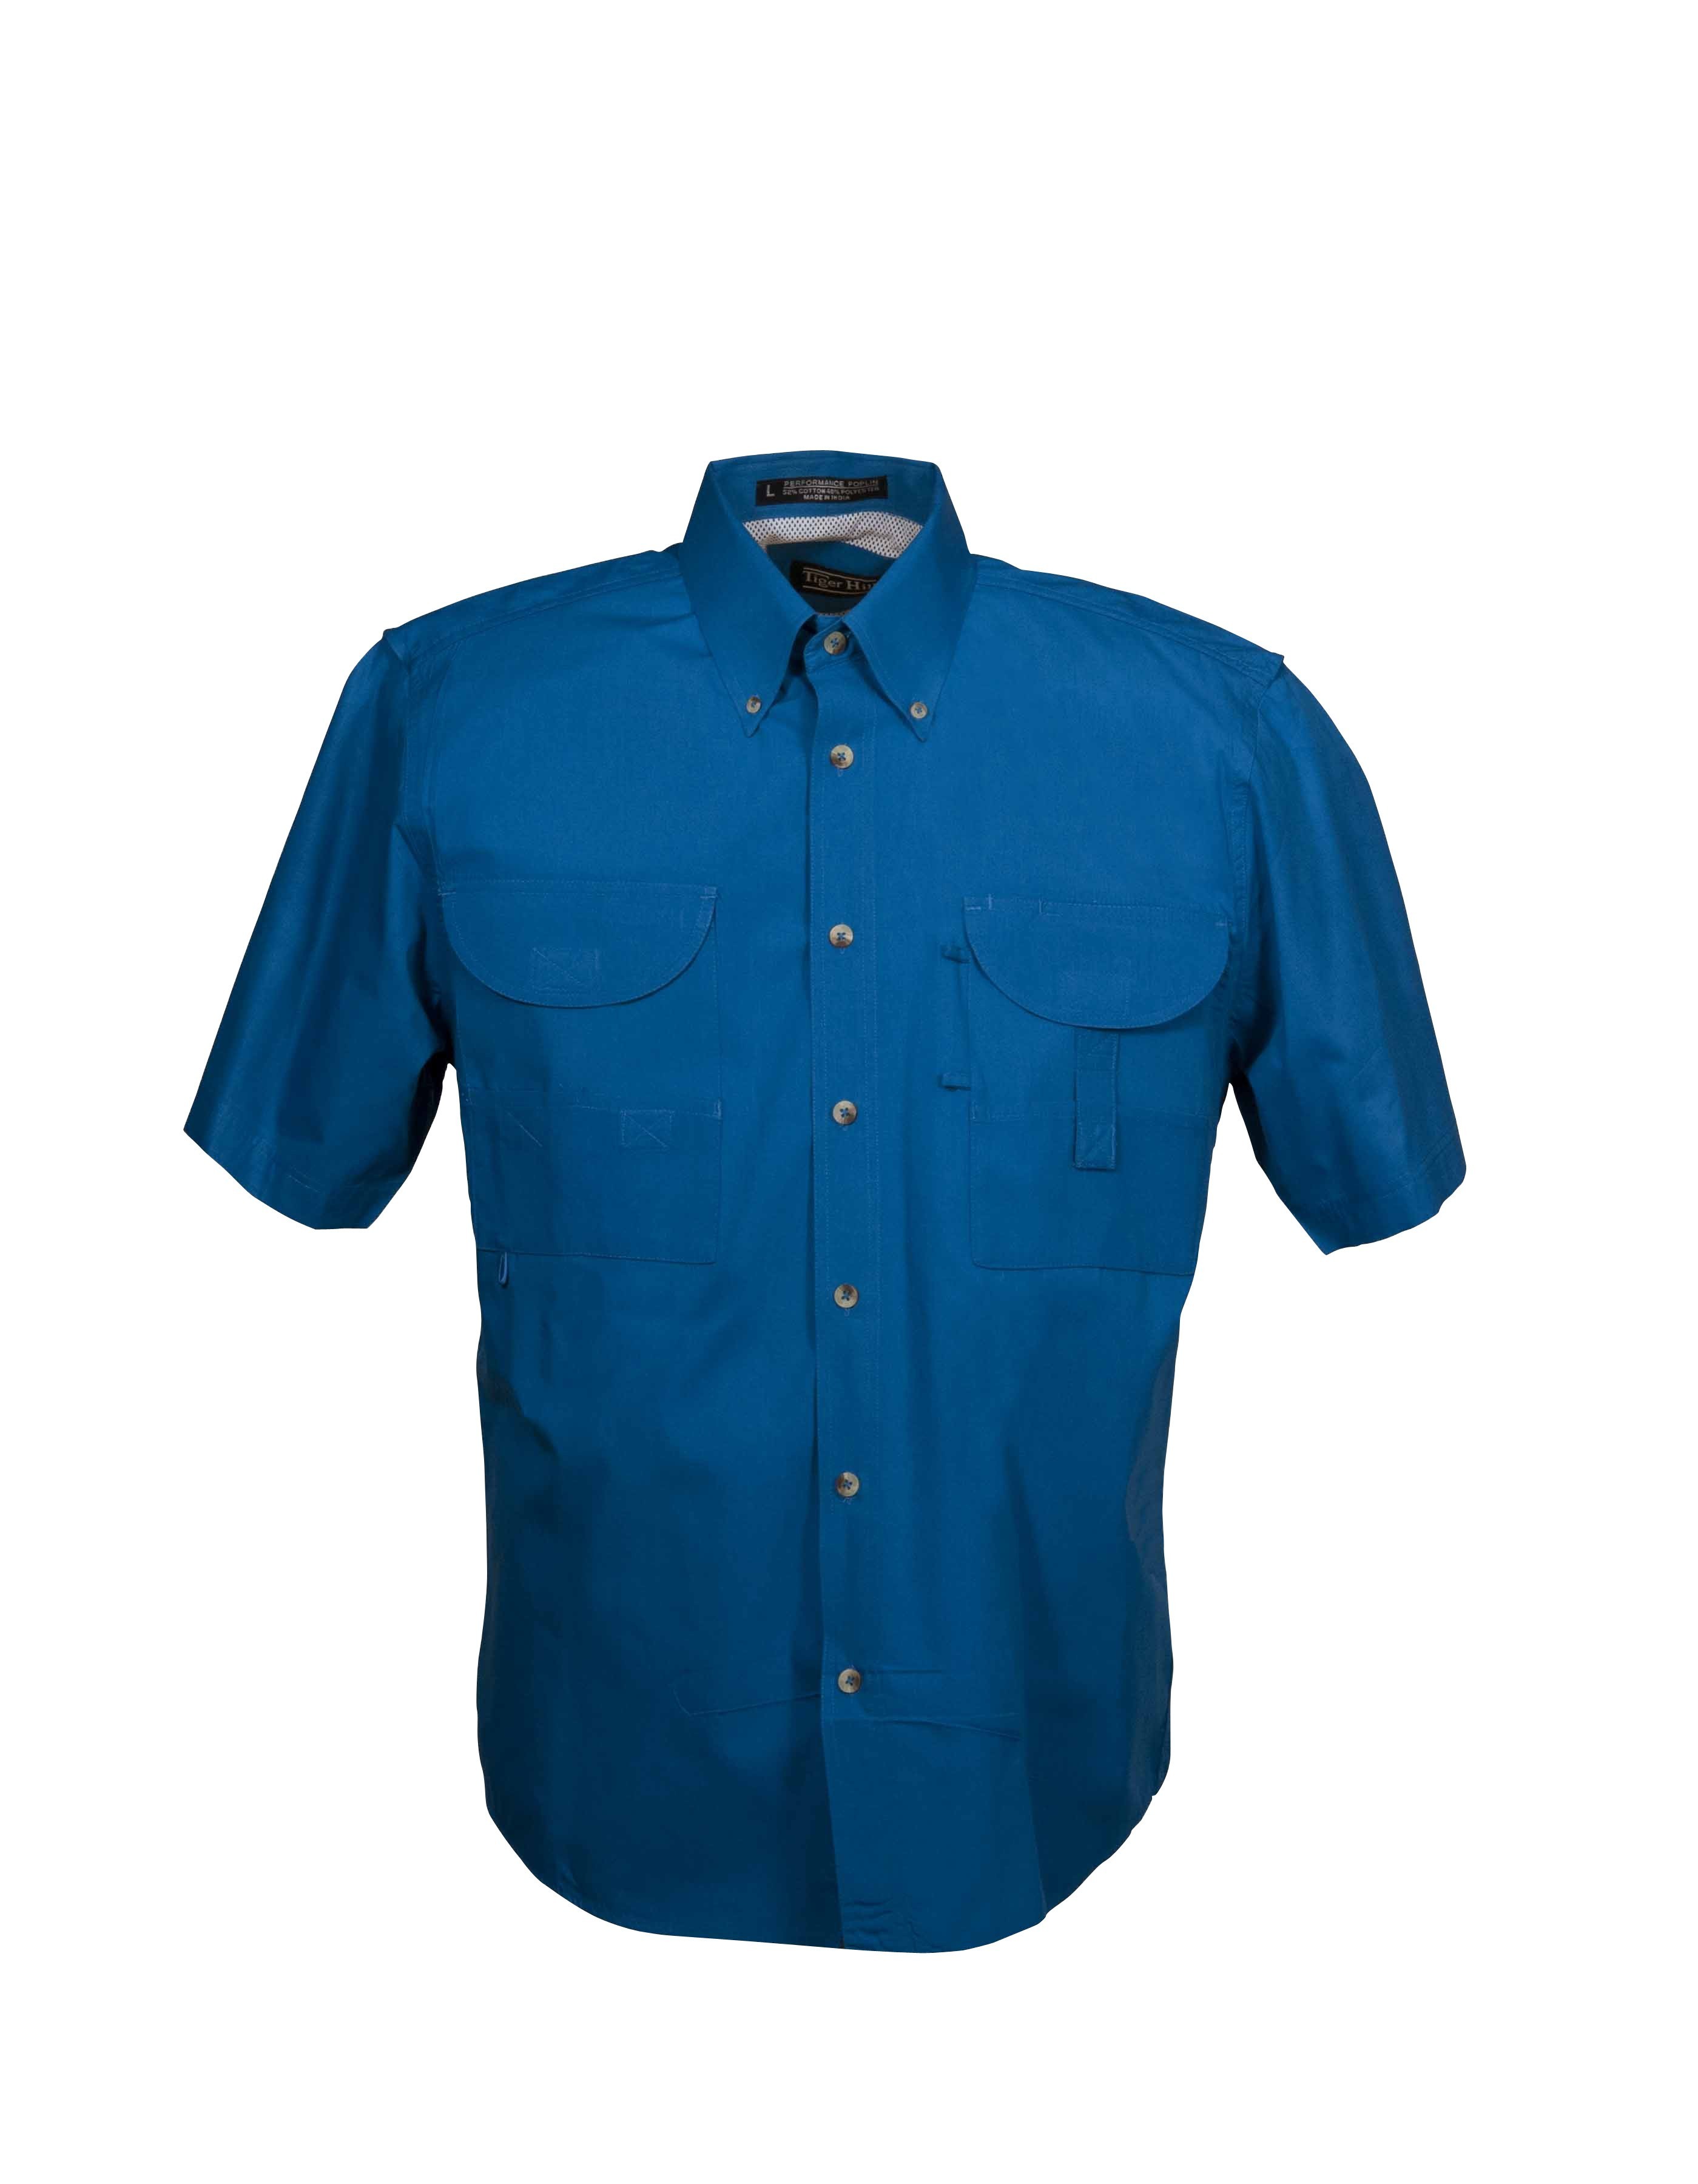 Tiger Hill Men's Fishing Shirt Short Sleeves Royal Blue